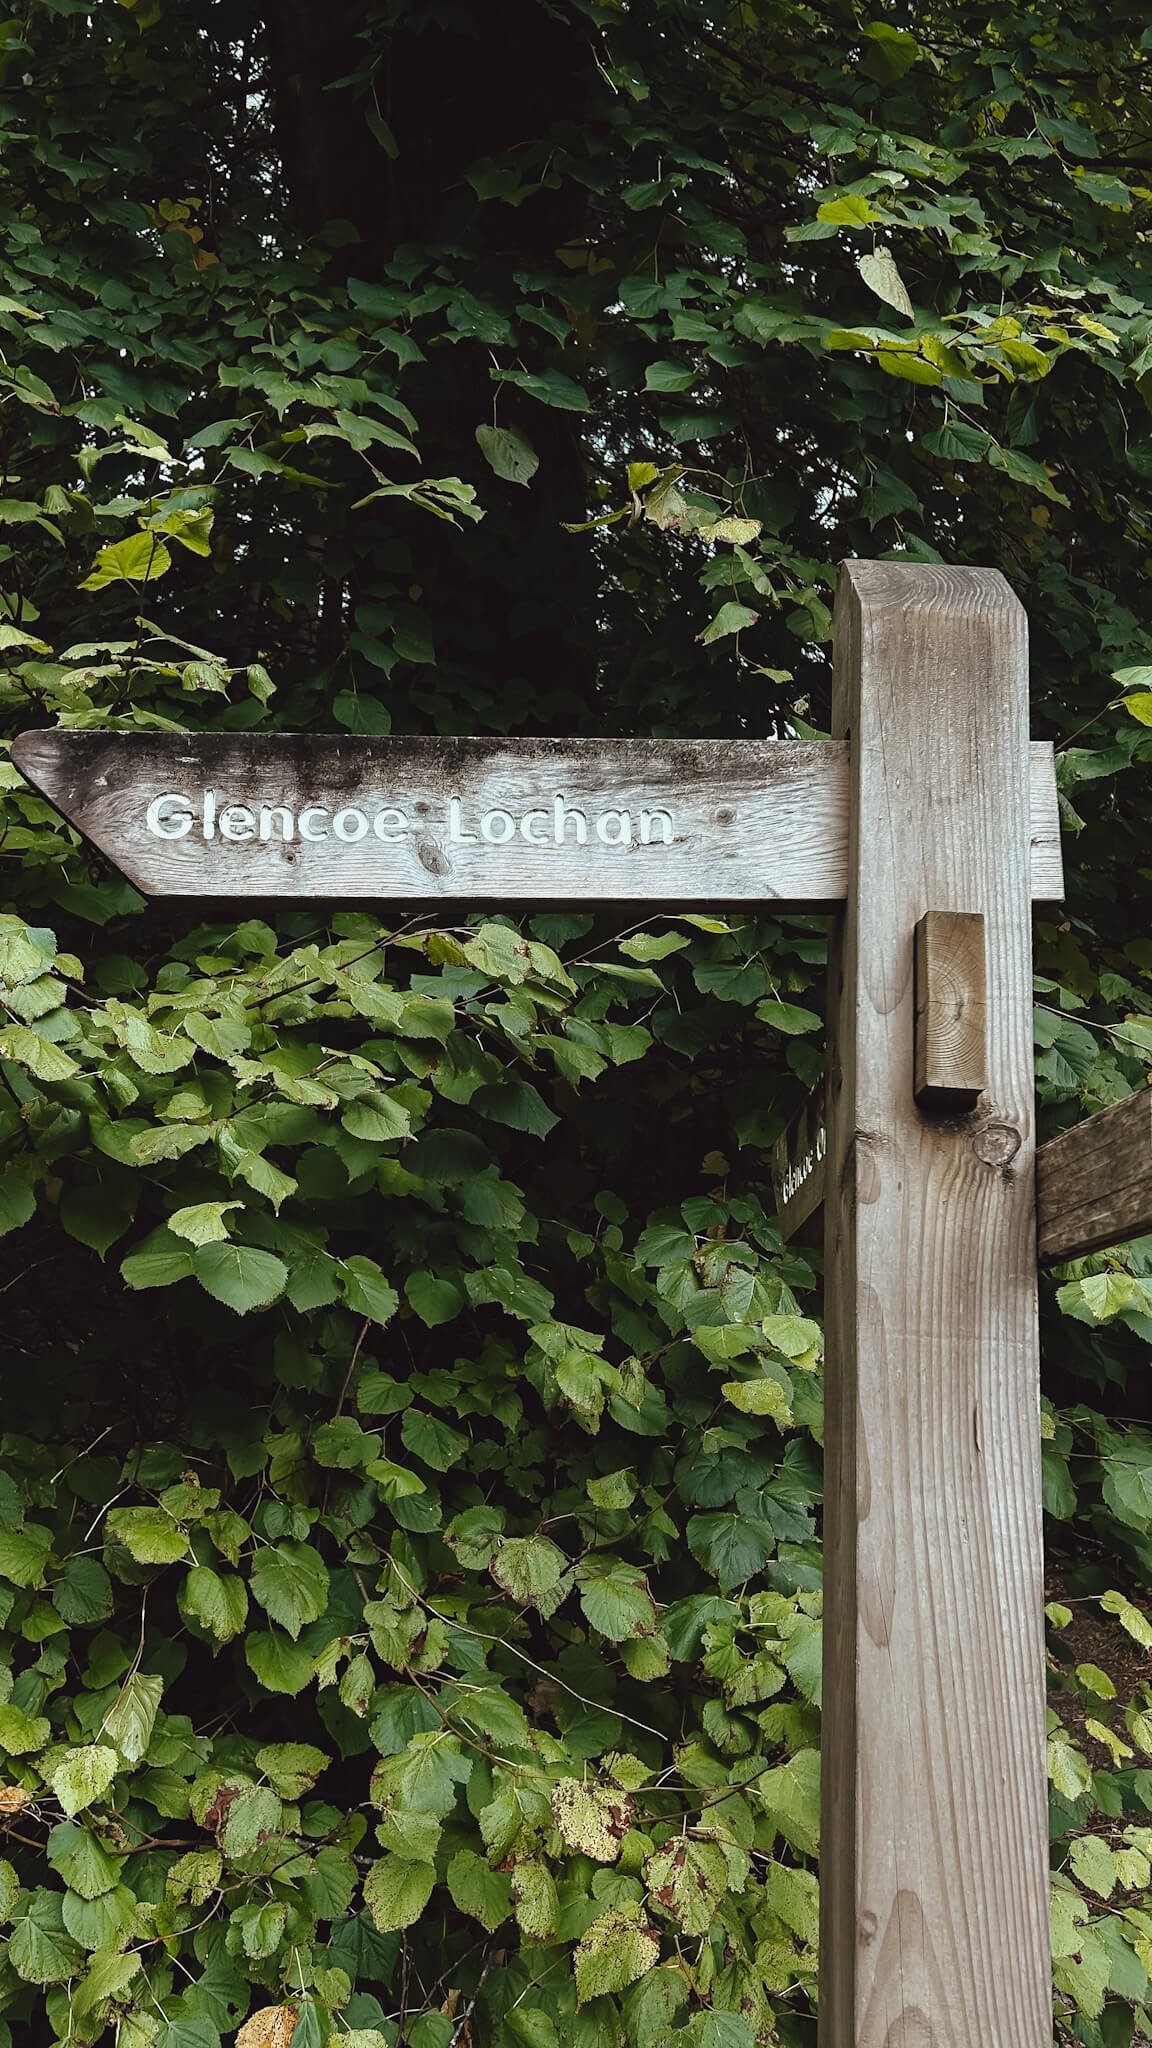 glencoe-lochan-signpost-how-to-explore.jpg